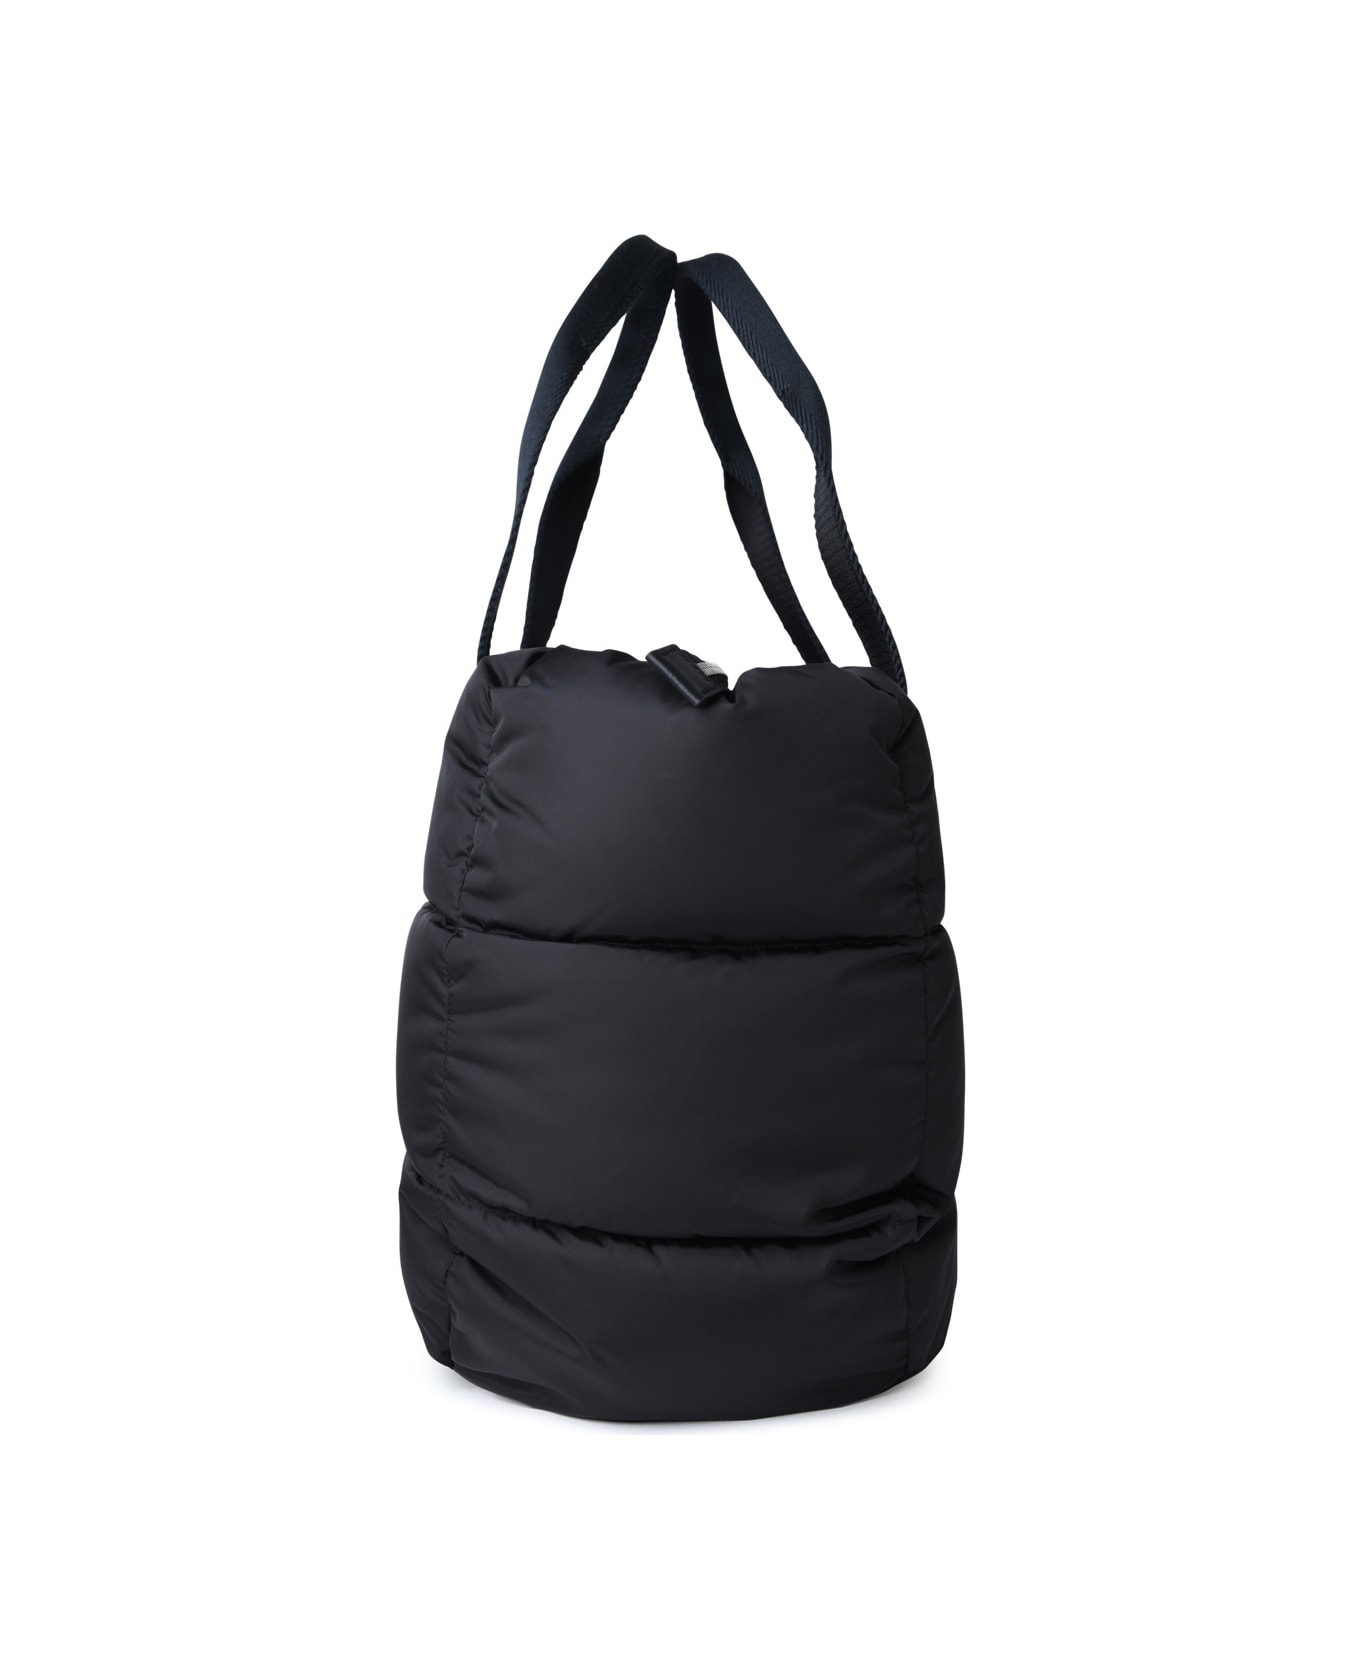 Moncler 'caradoc' Black Nylon Bag - Nero